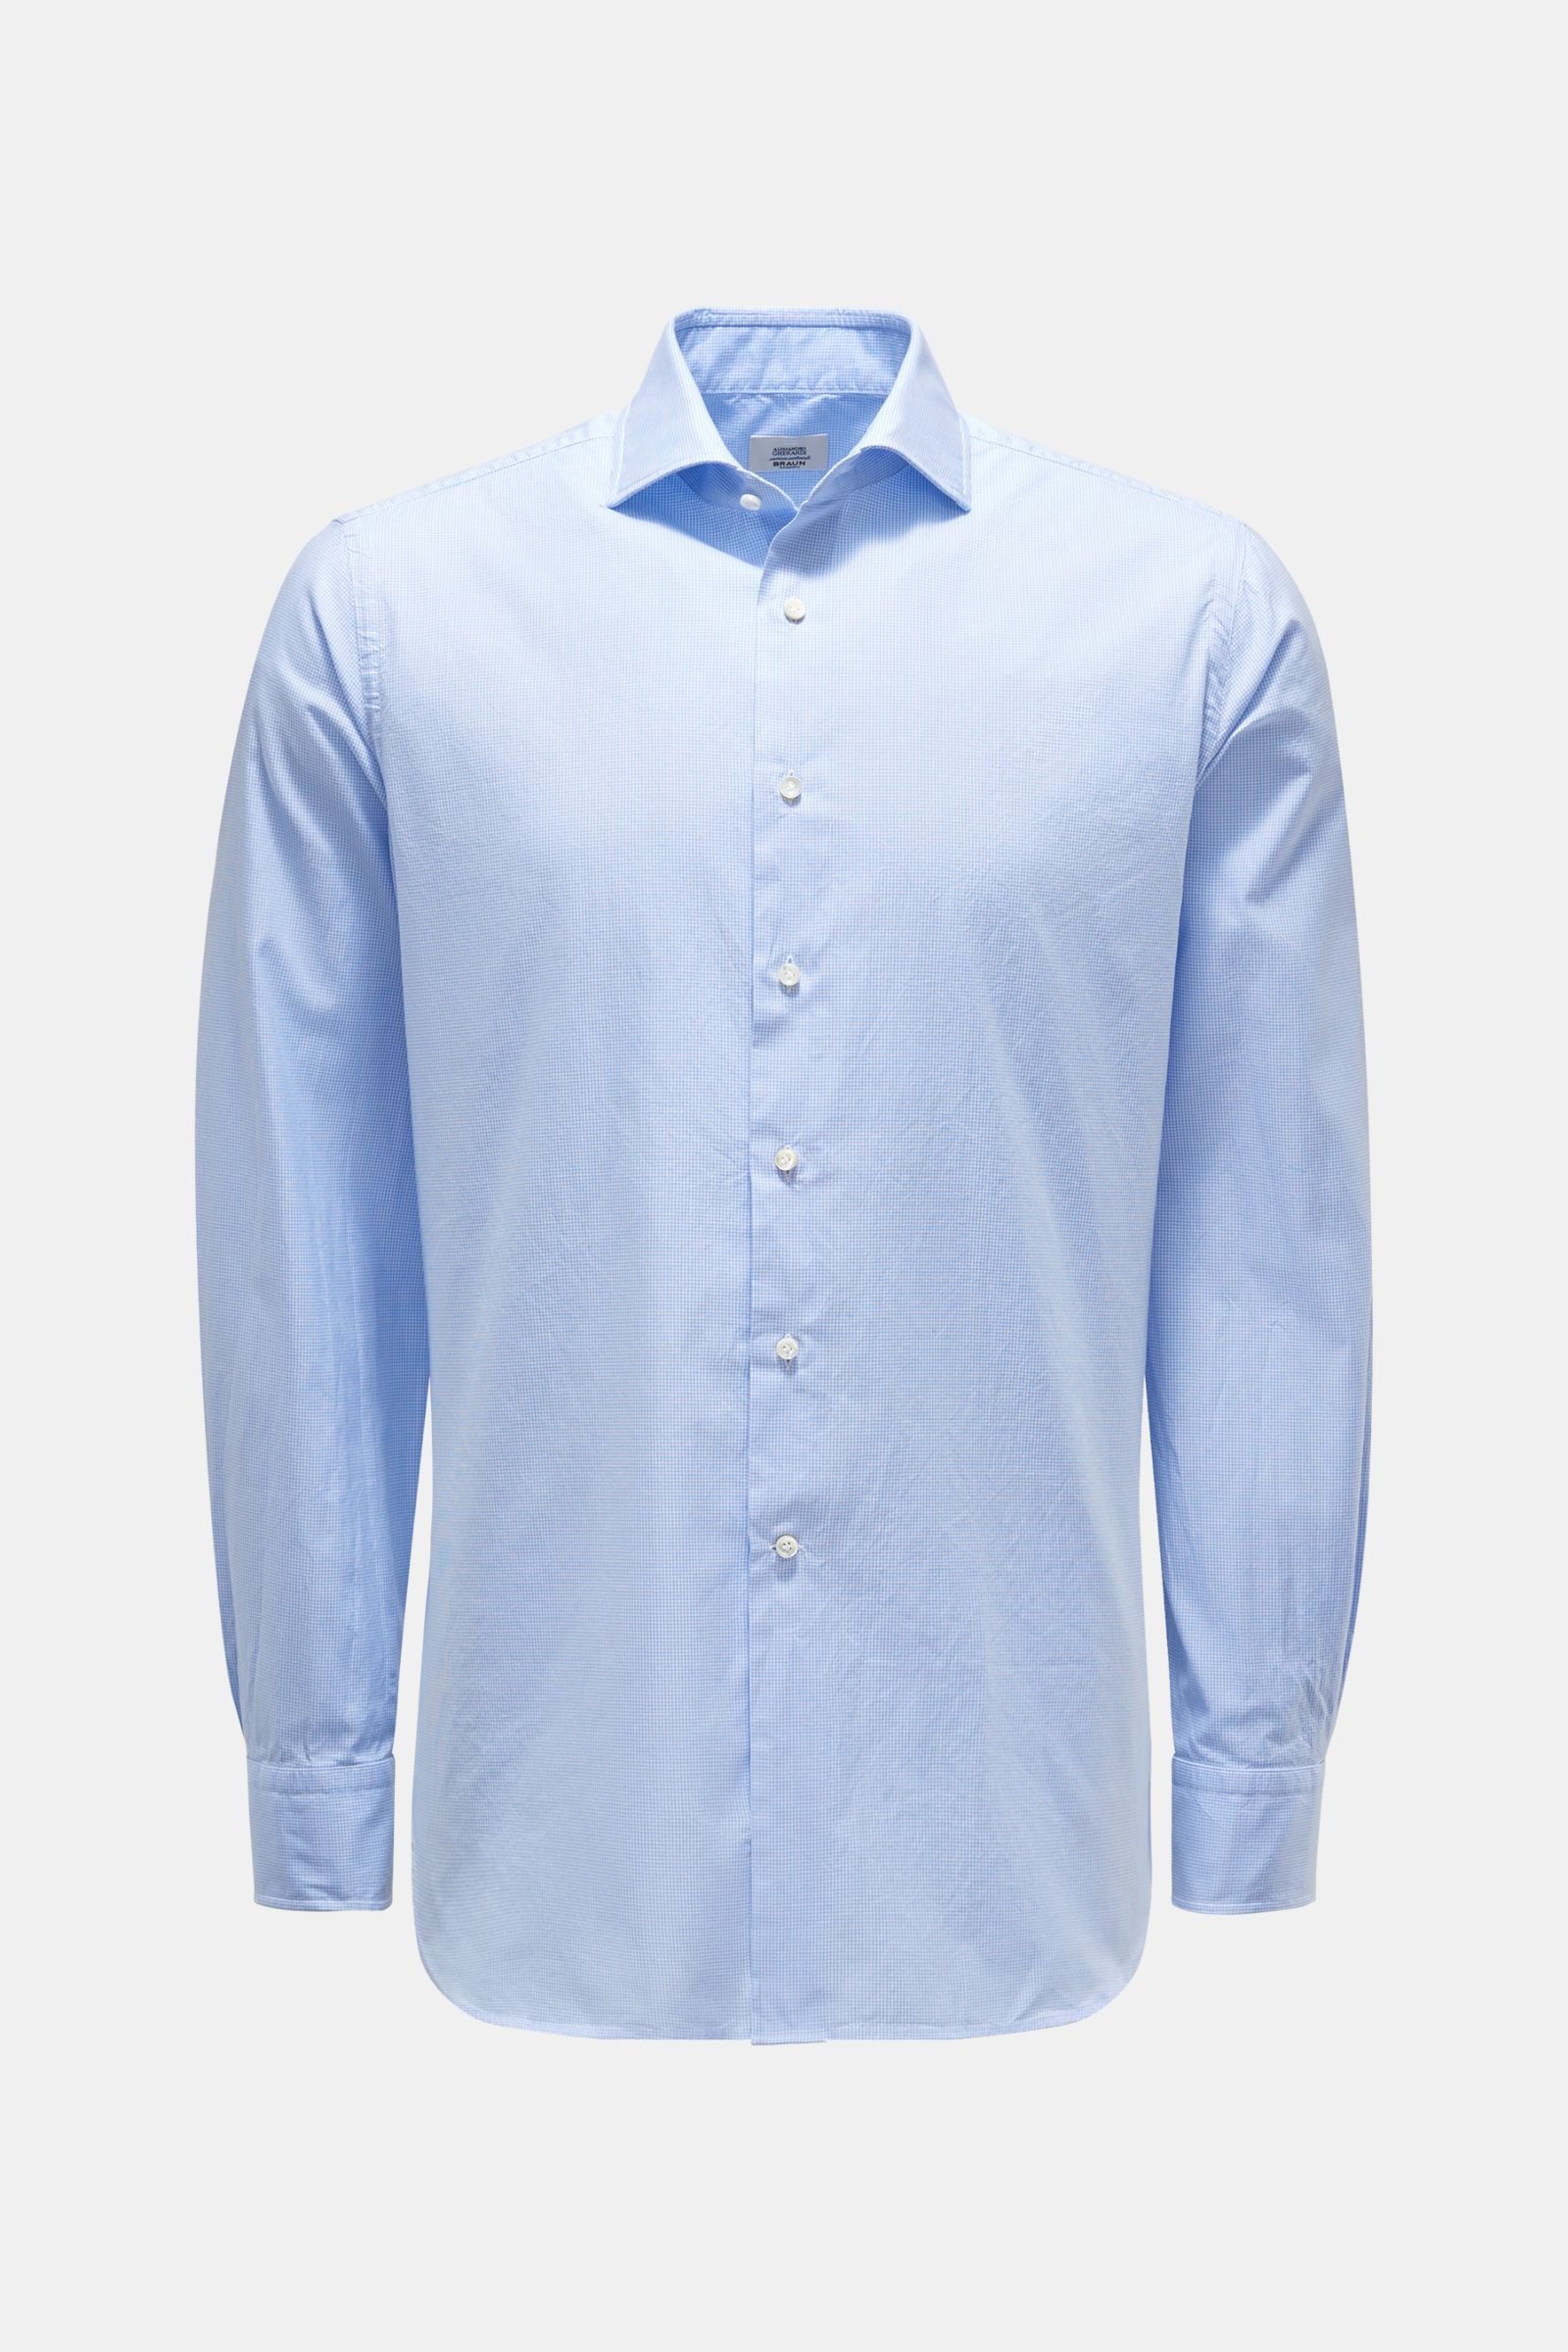 Casual shirt shark collar light blue/white checked